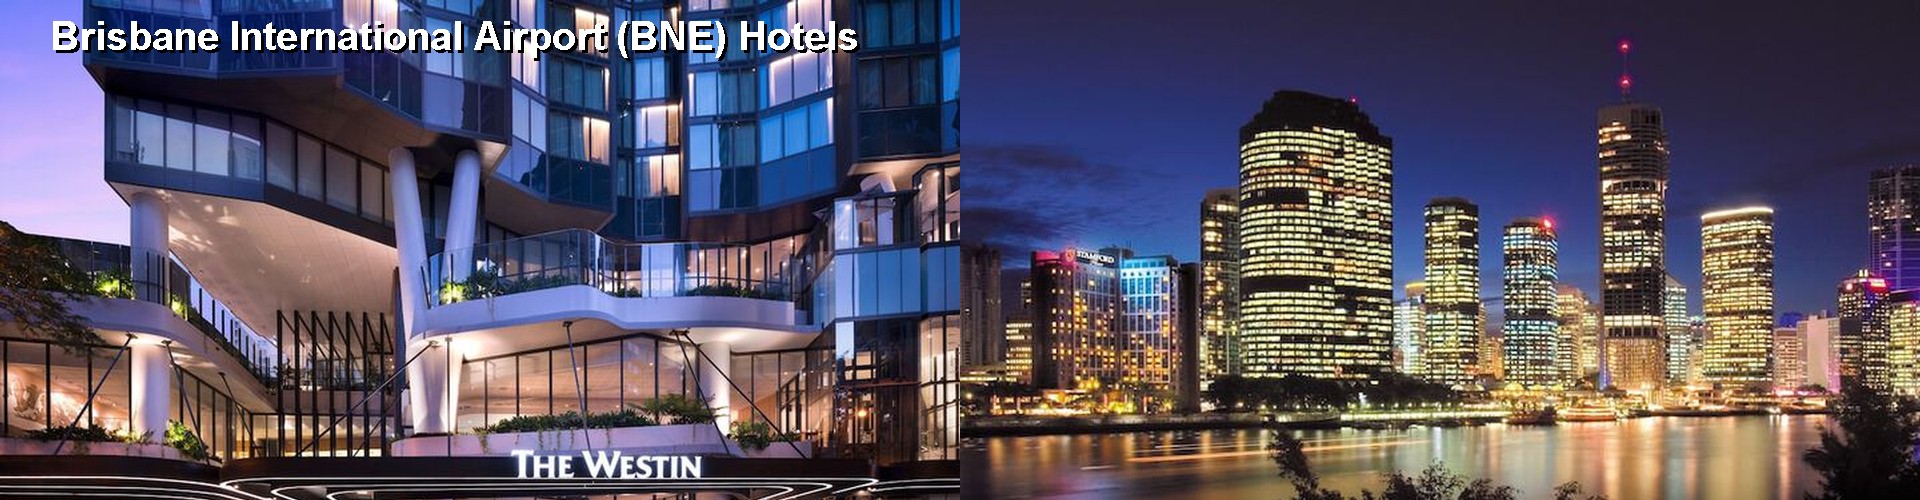 5 Best Hotels near Brisbane International Airport (BNE)